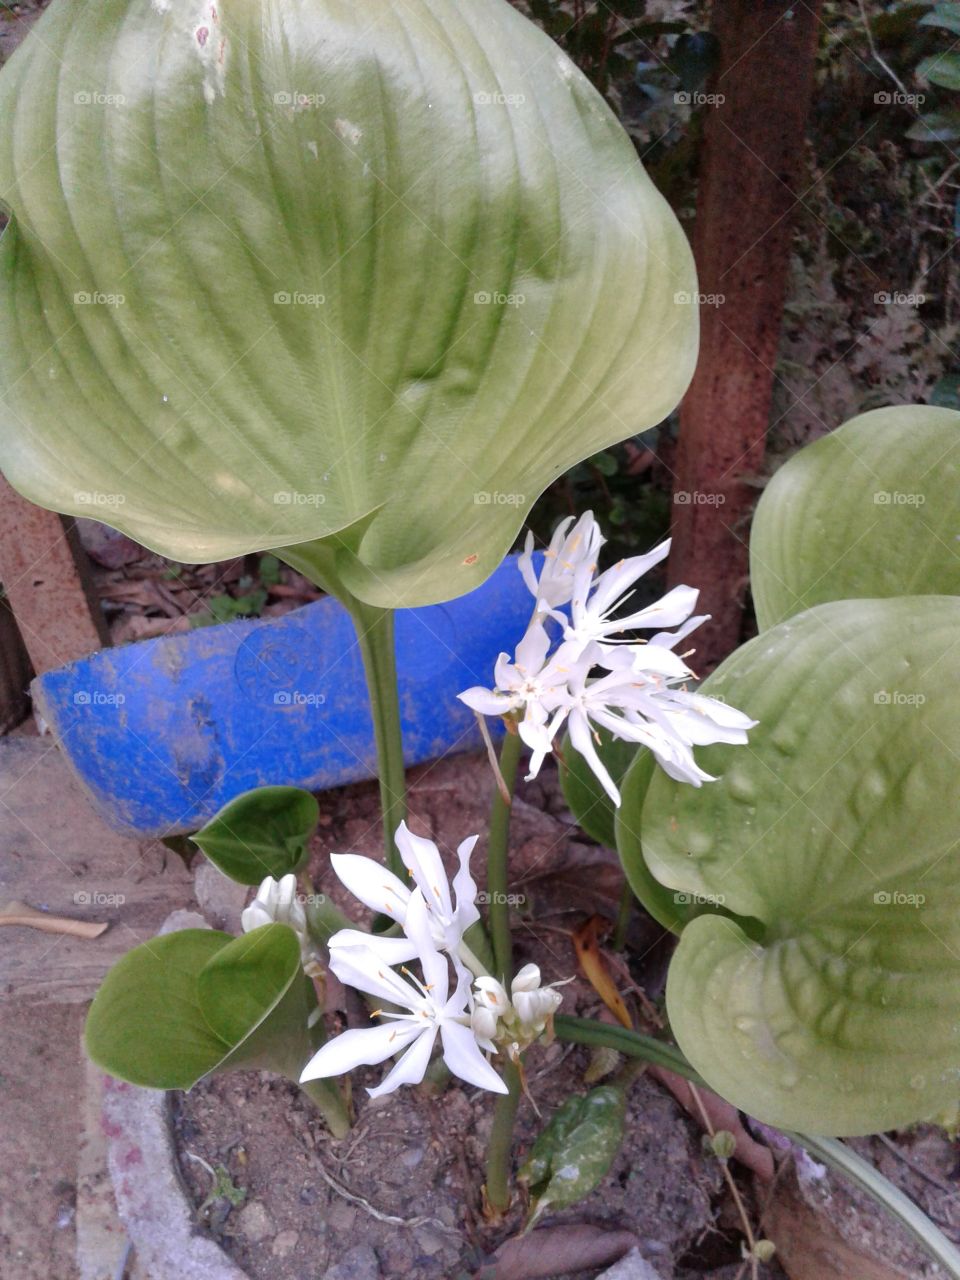 Lily species